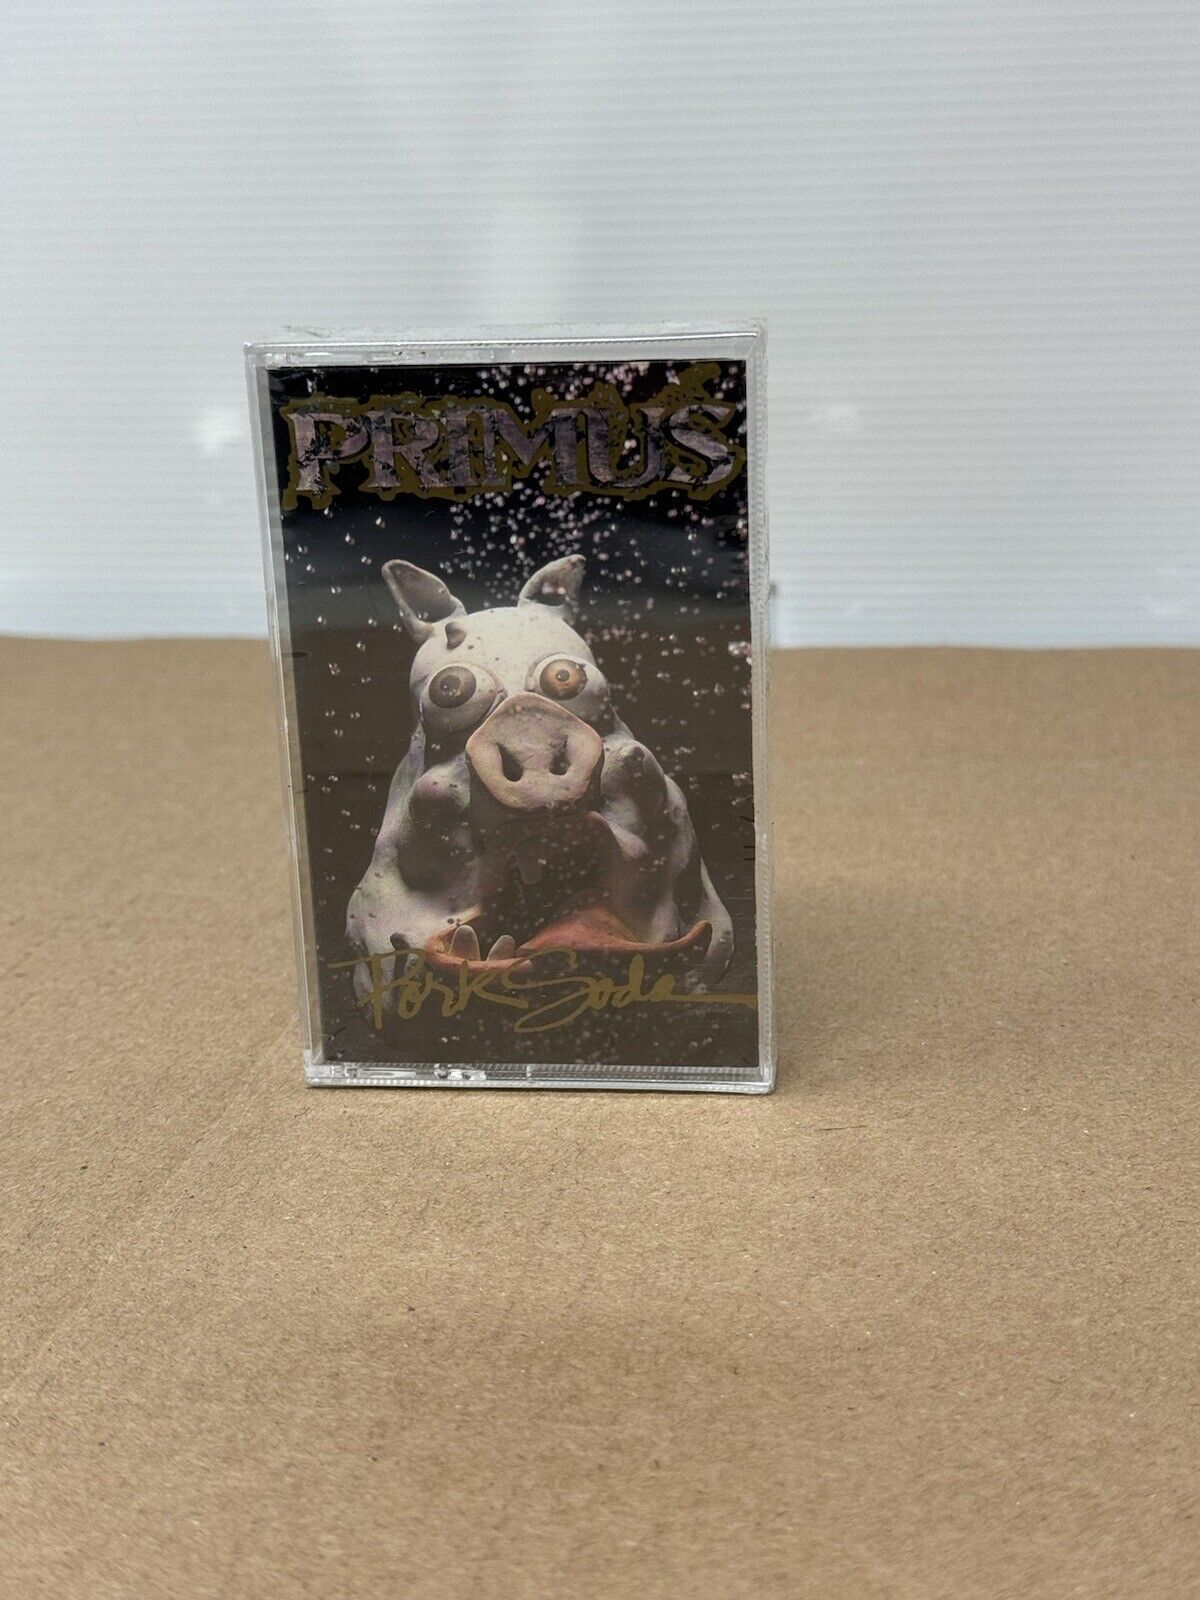 PRIMUS Pork Soda 1993 Cassette Tape Atlantic Sealed New NOS RARE HTF